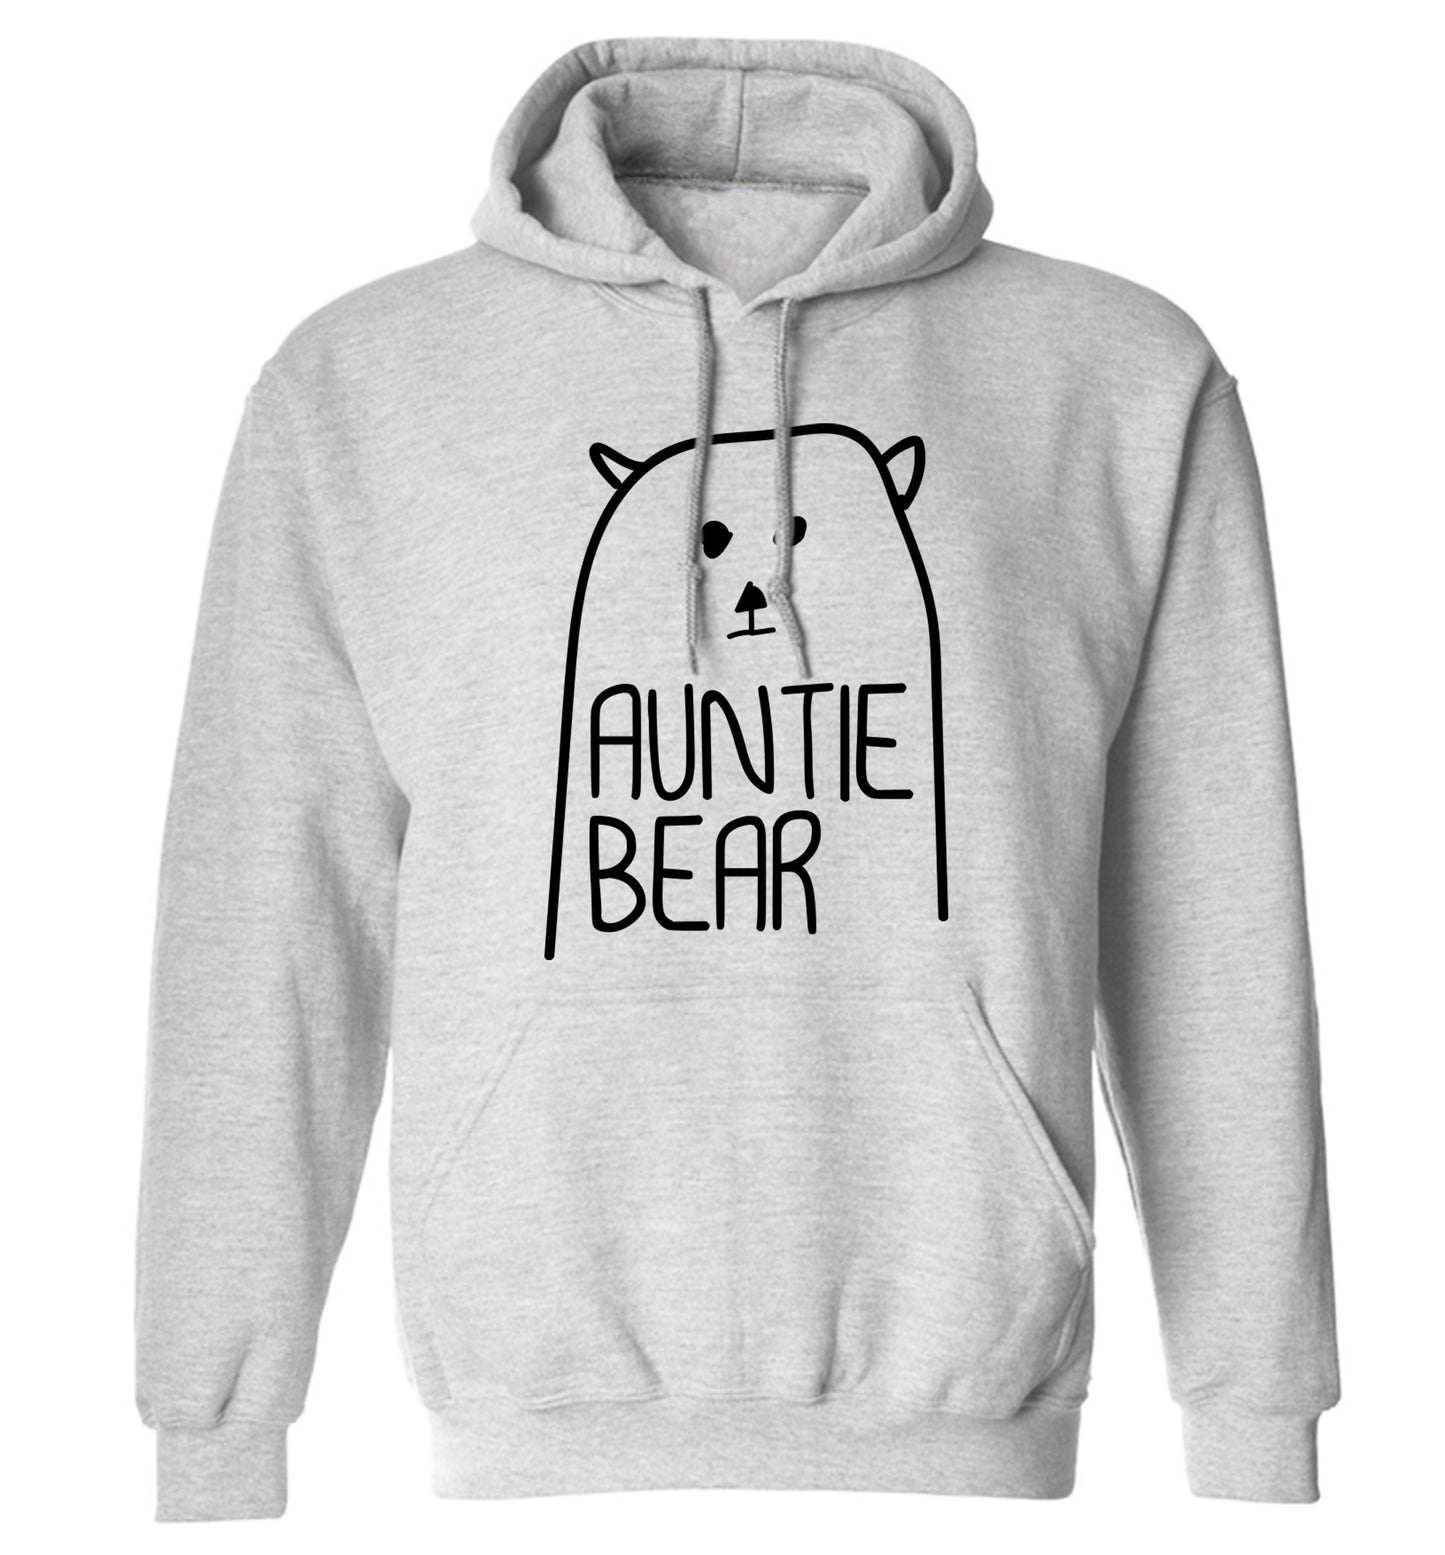 Auntie bear adults unisex grey hoodie 2XL